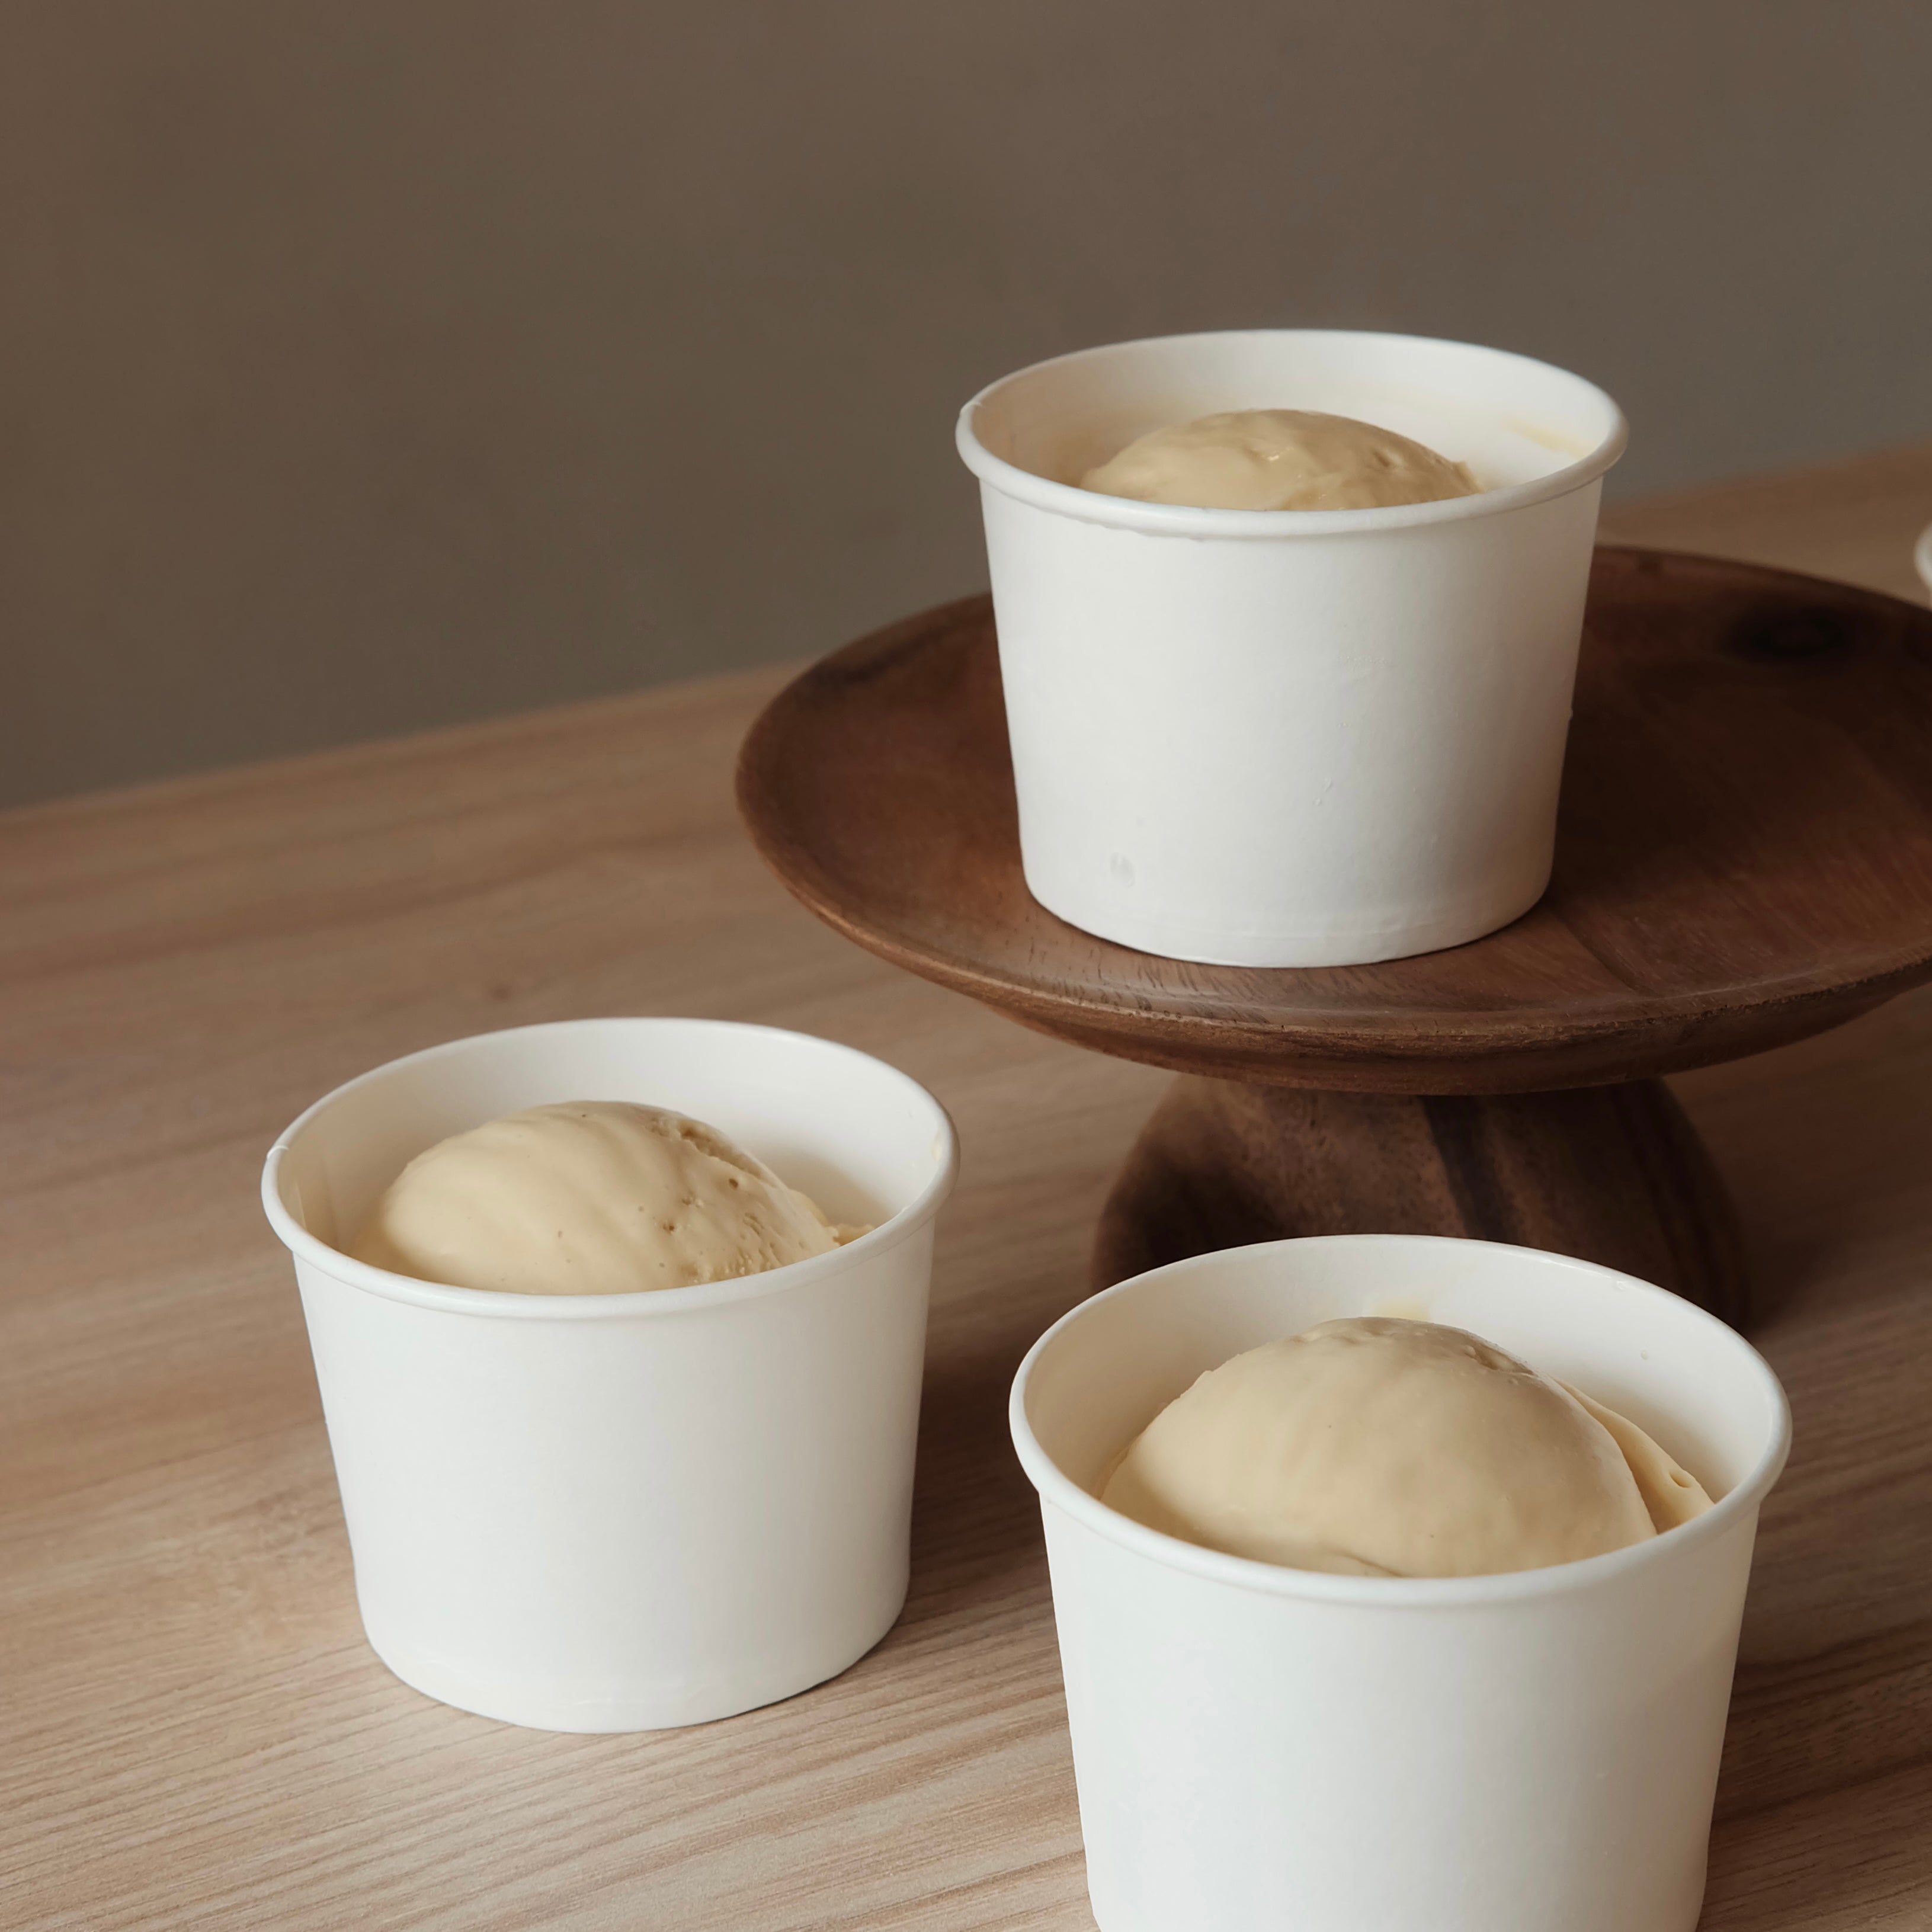 Sea Salt Gula Melaka Ice Cream Set: A Harmonious Flavour Fusion